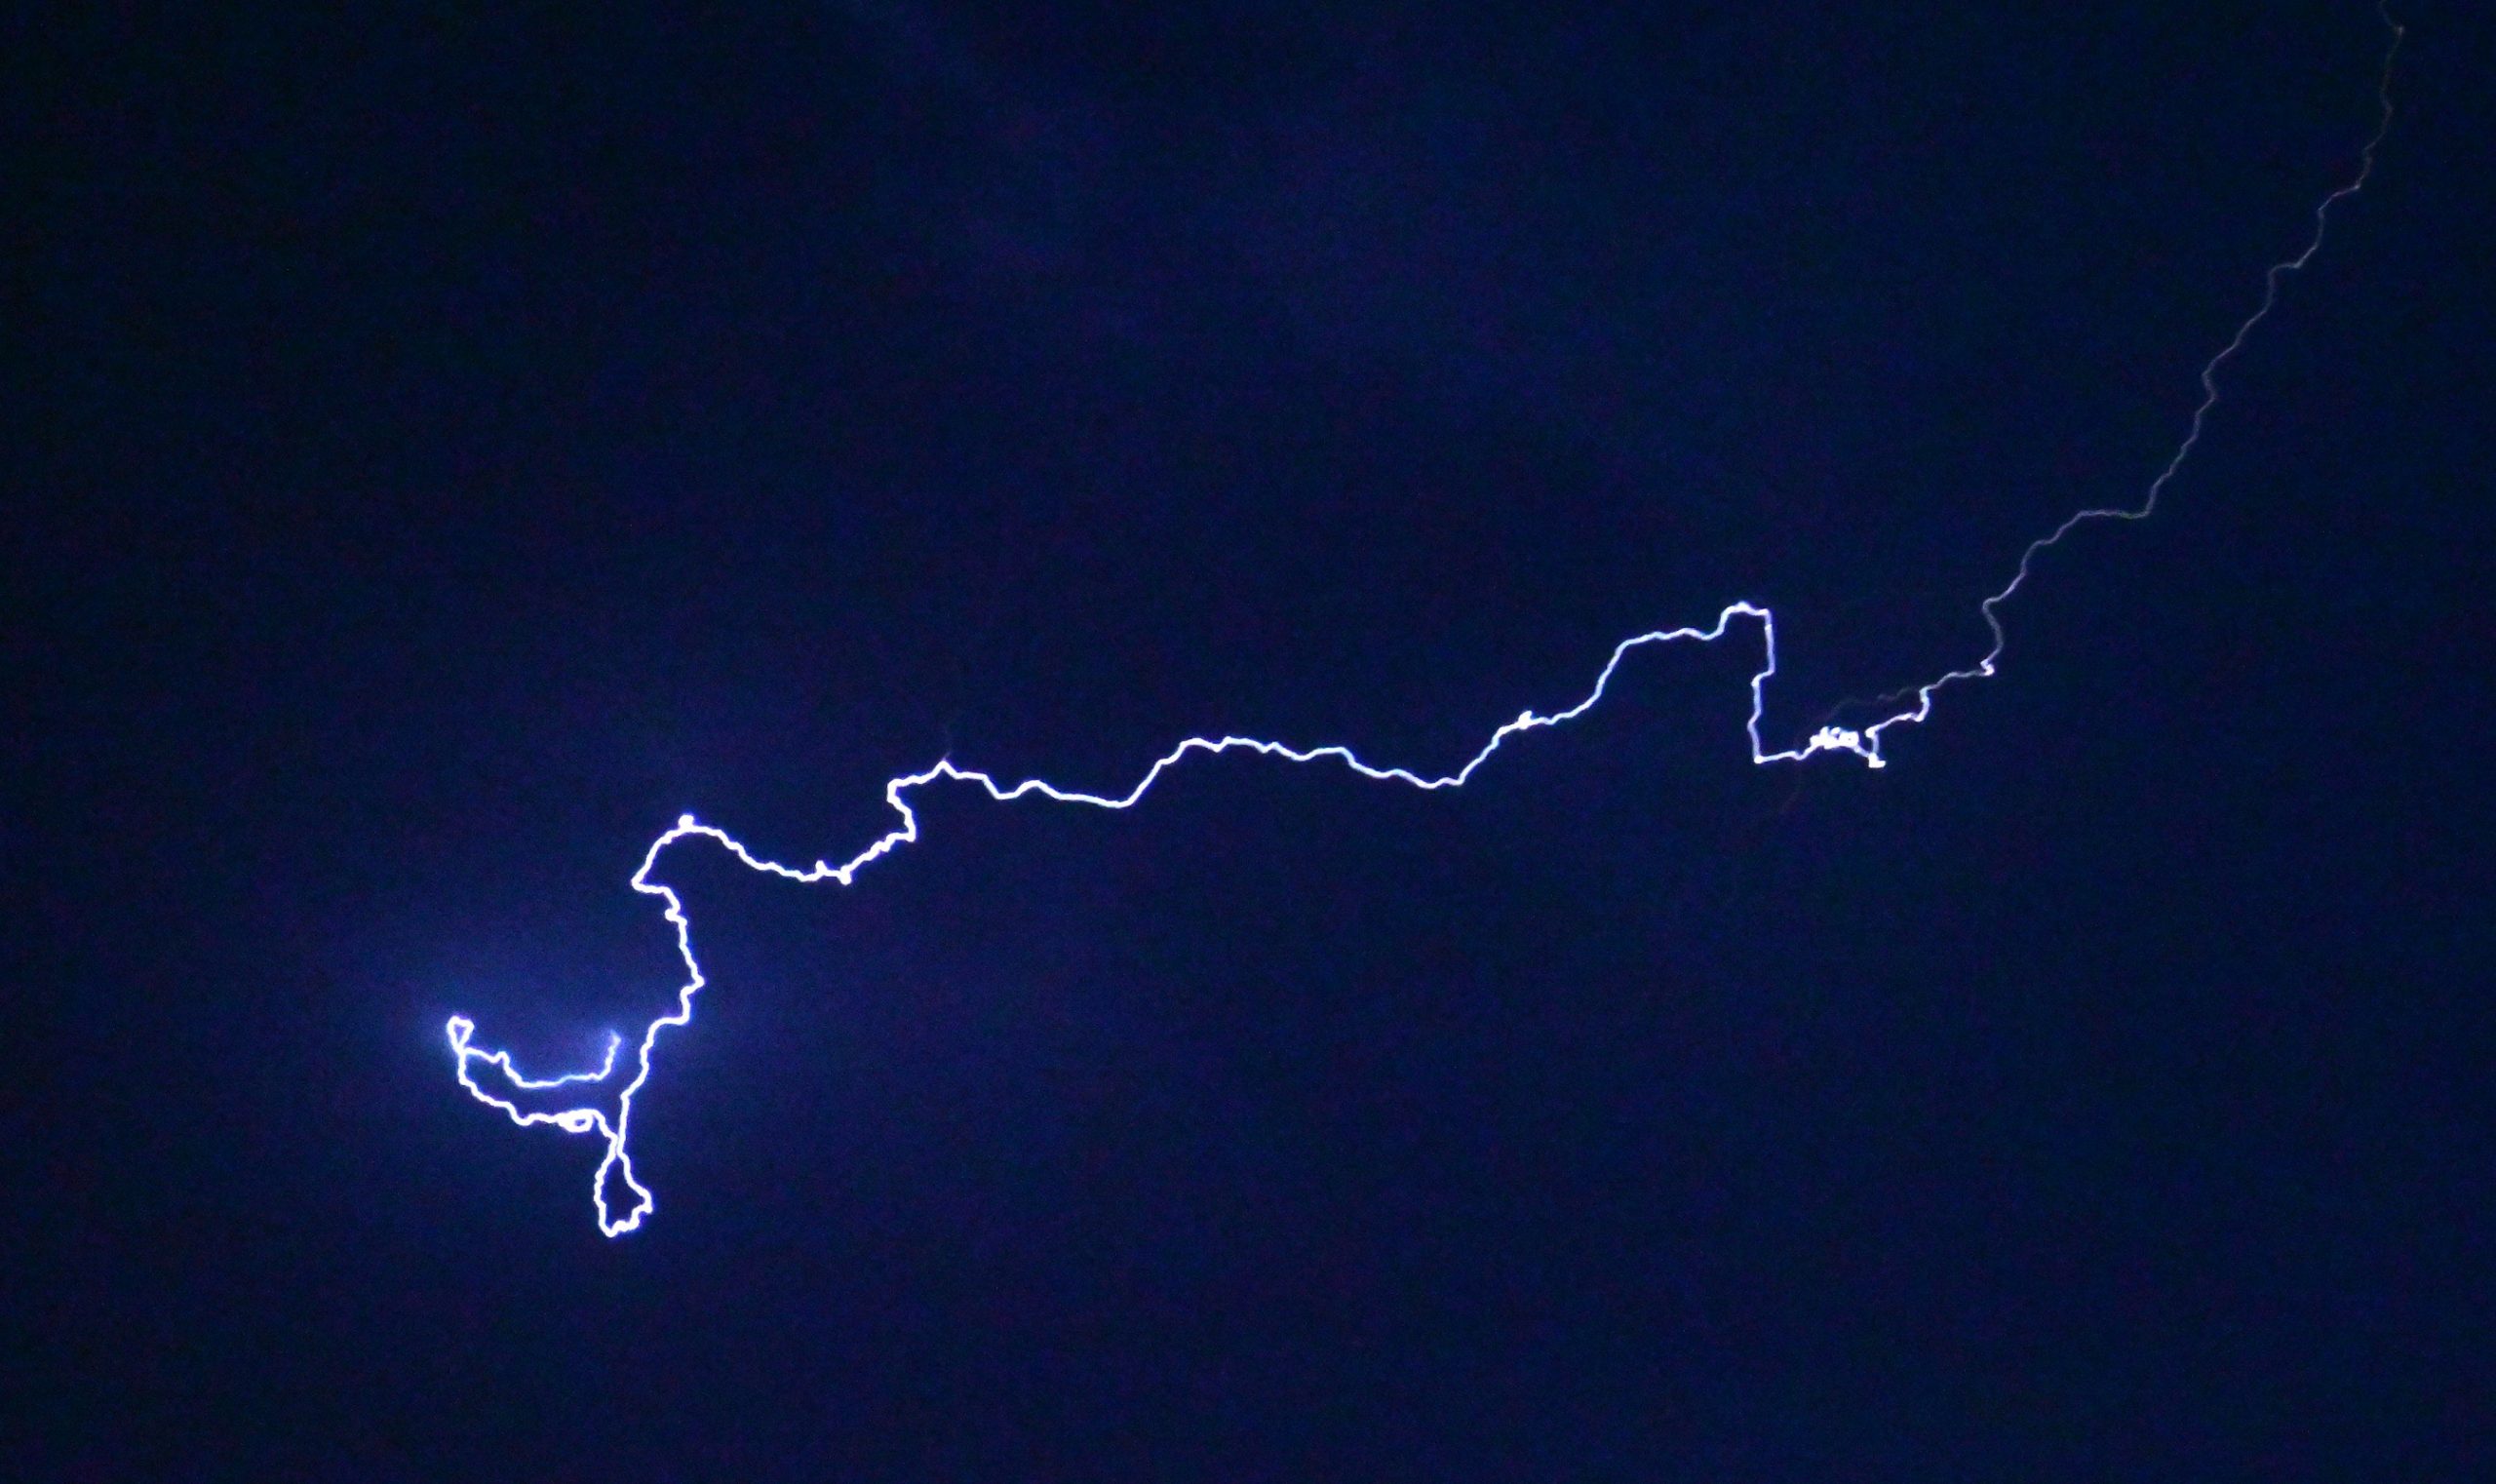 Lightning,electrical,storm,